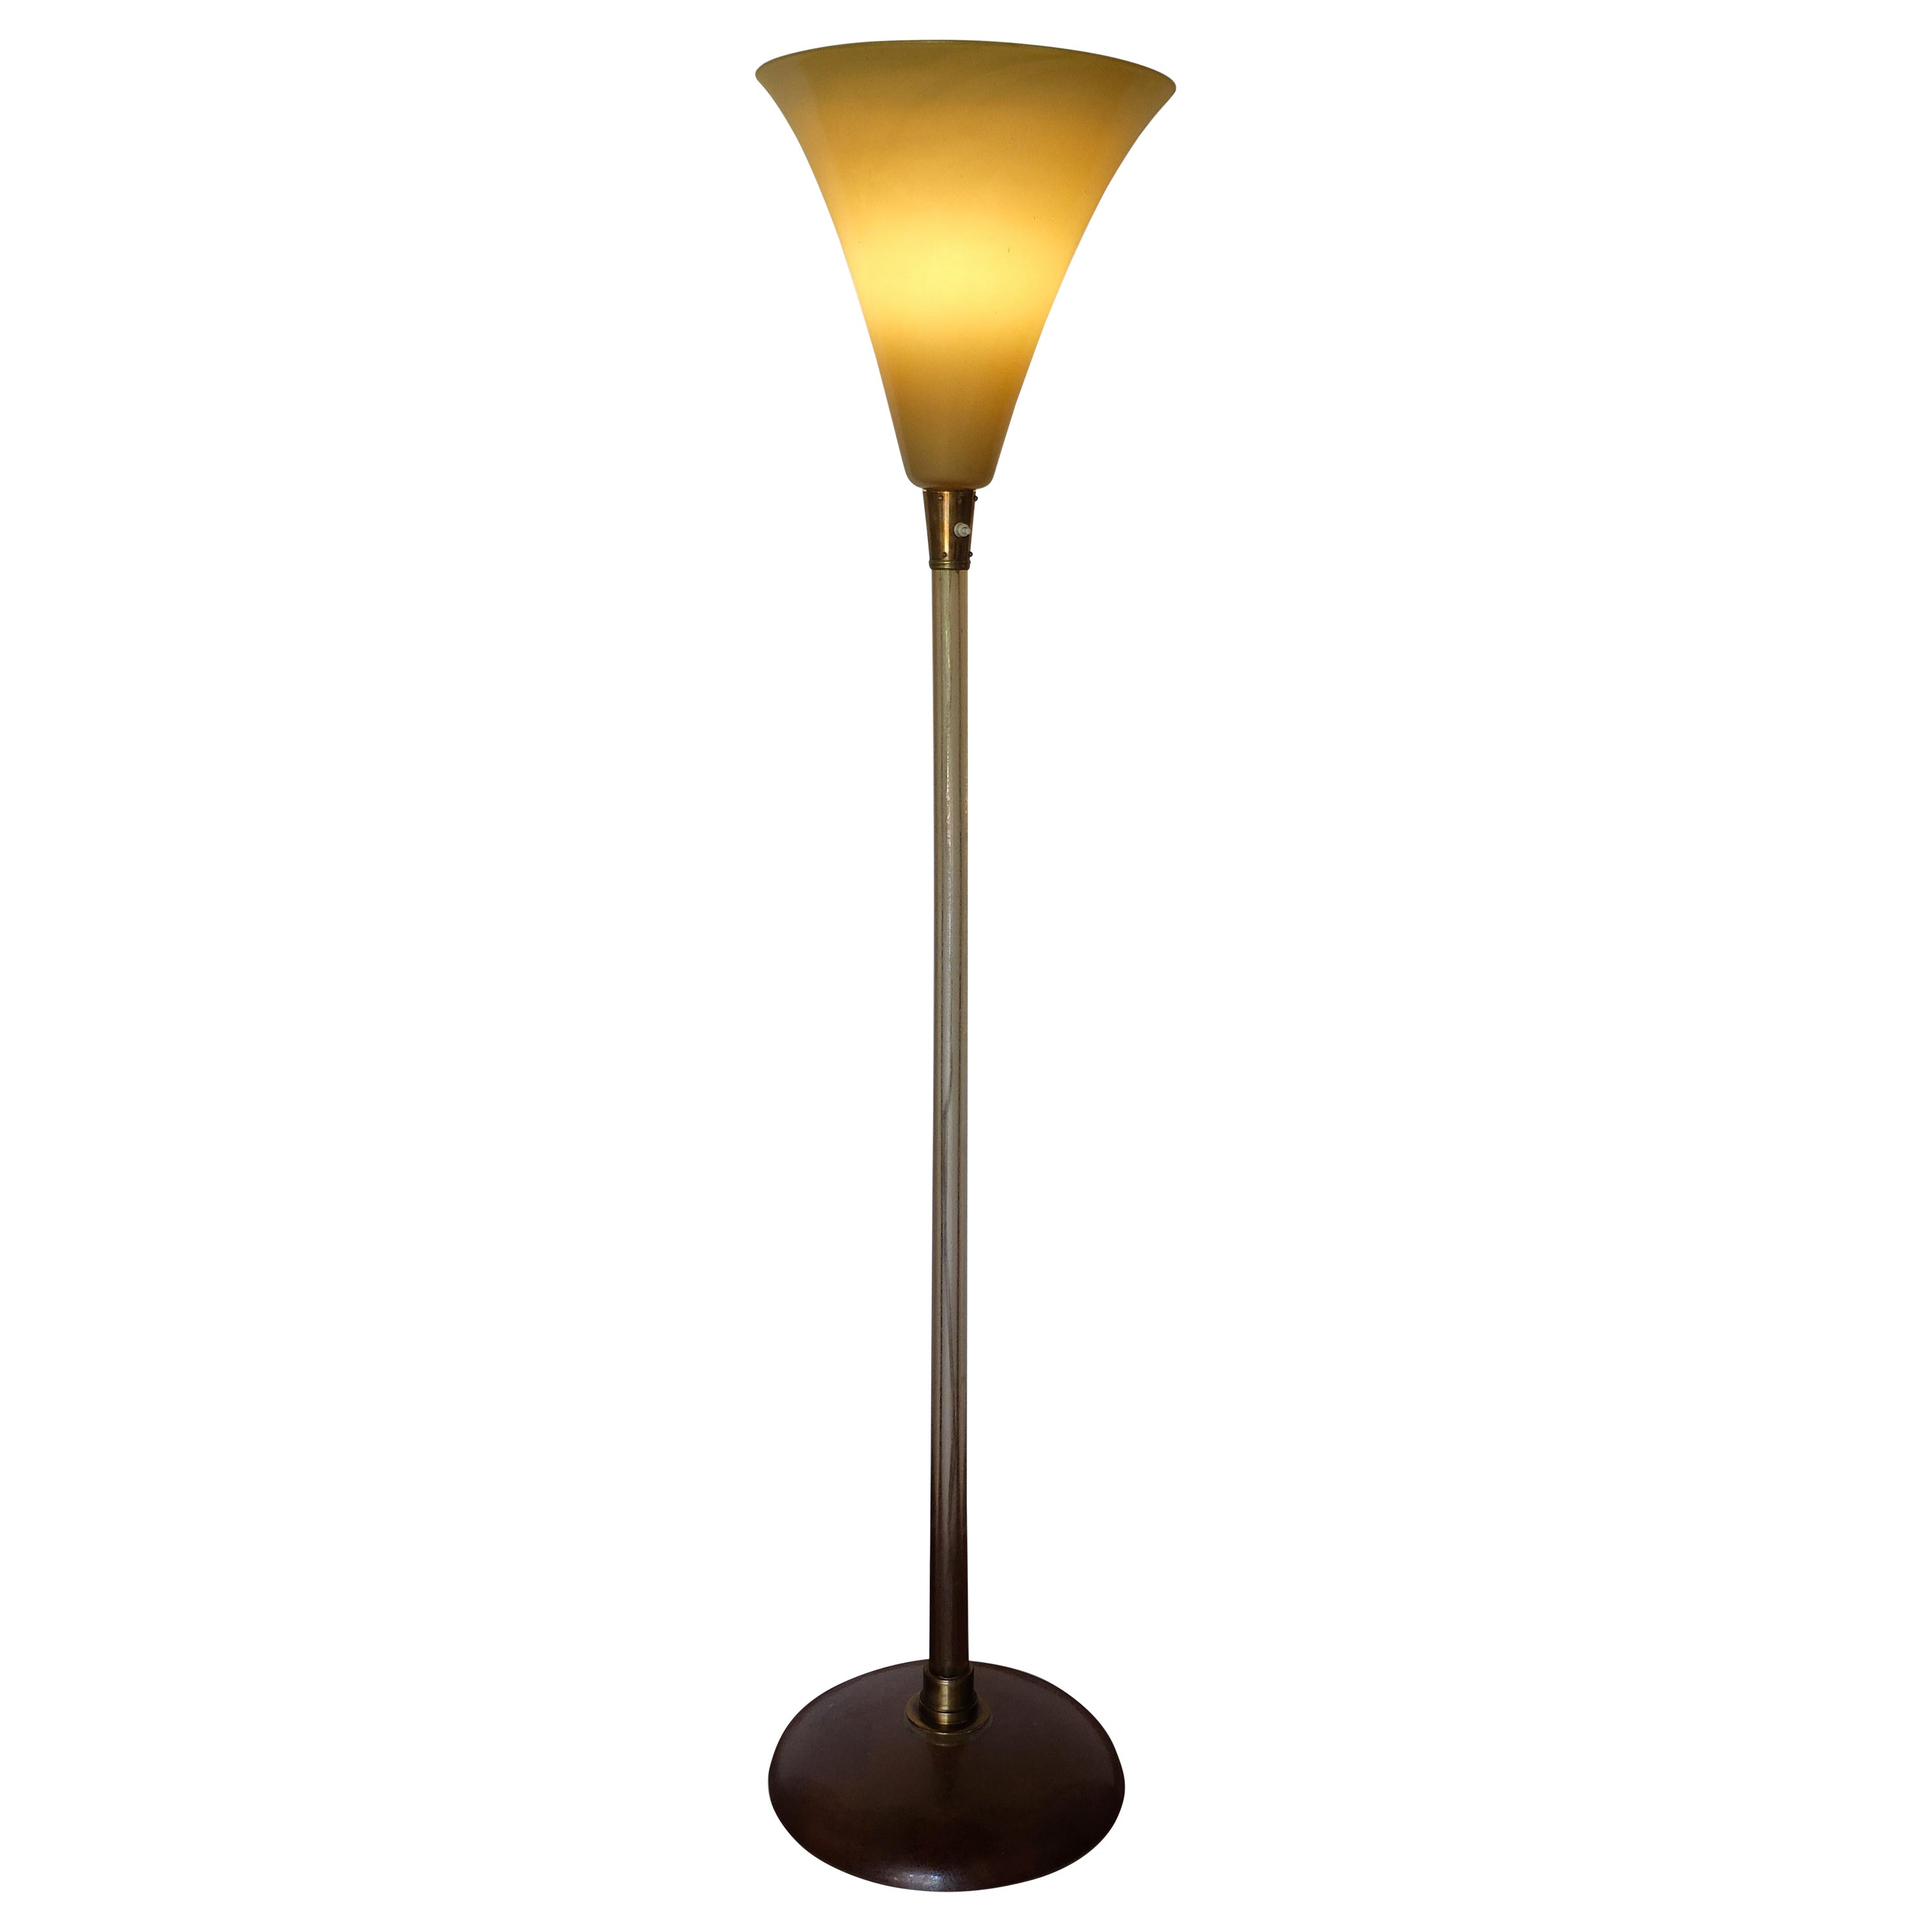 Tomaso Buzzi for Venini Murano, Italian Mid-Century Glass Floor Lamp, 1933